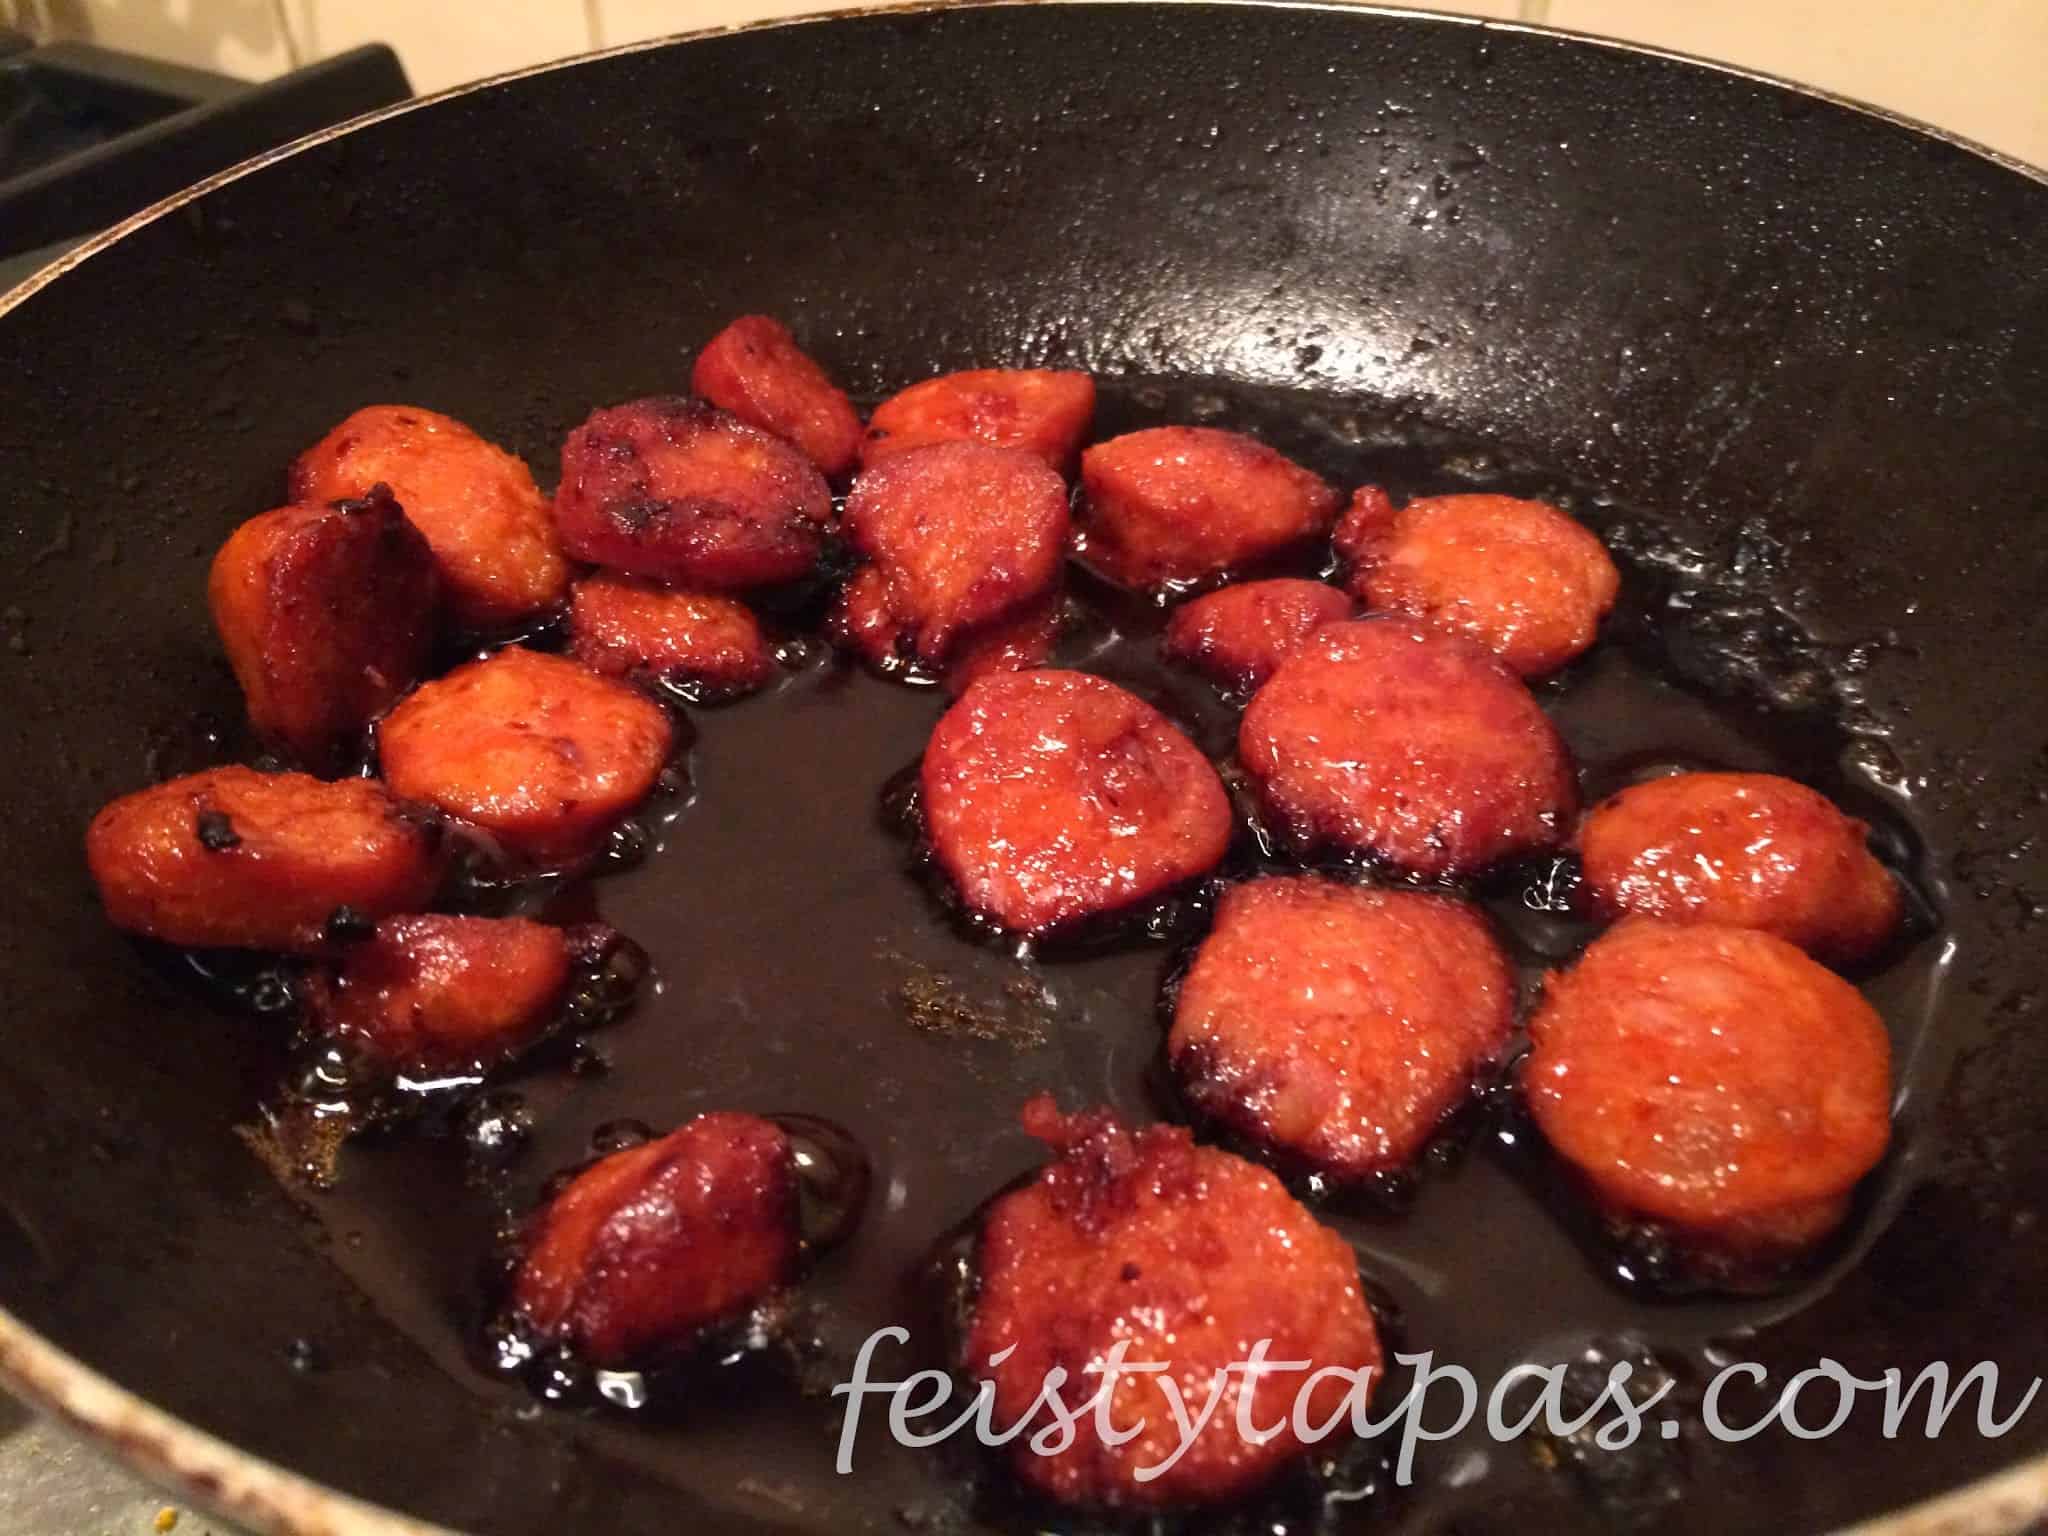 Feisty Tapas: Chorizo and hummus pita pockets / Pita con chorizo y humus